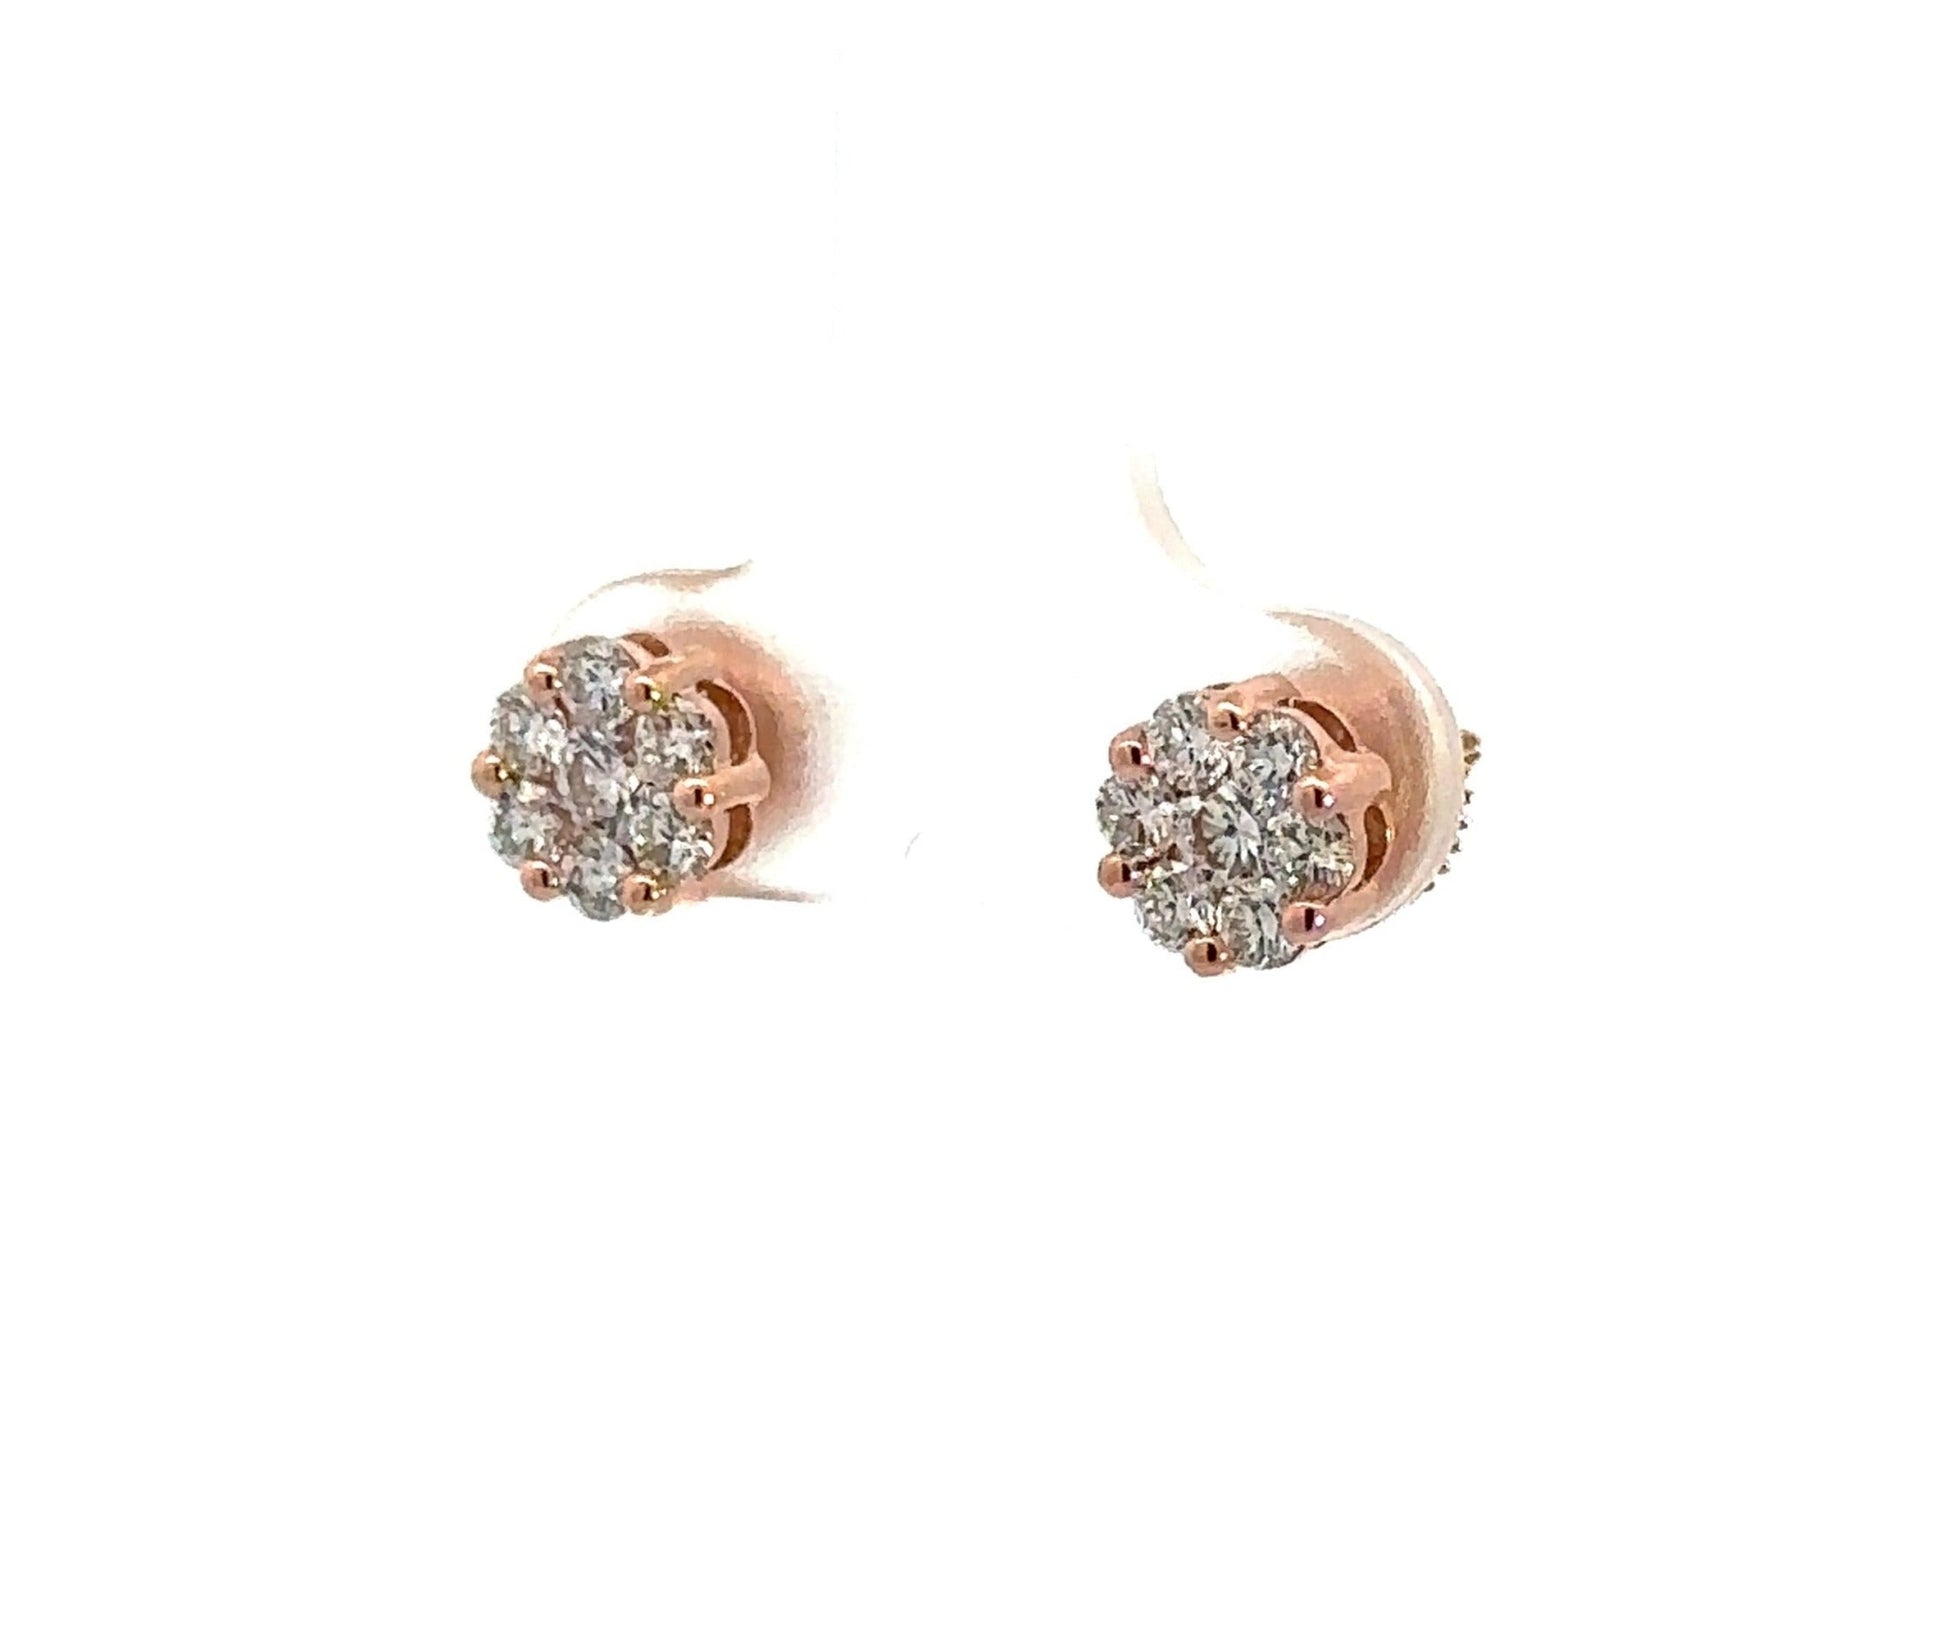 Diagonal view of rose gold diamond earrings